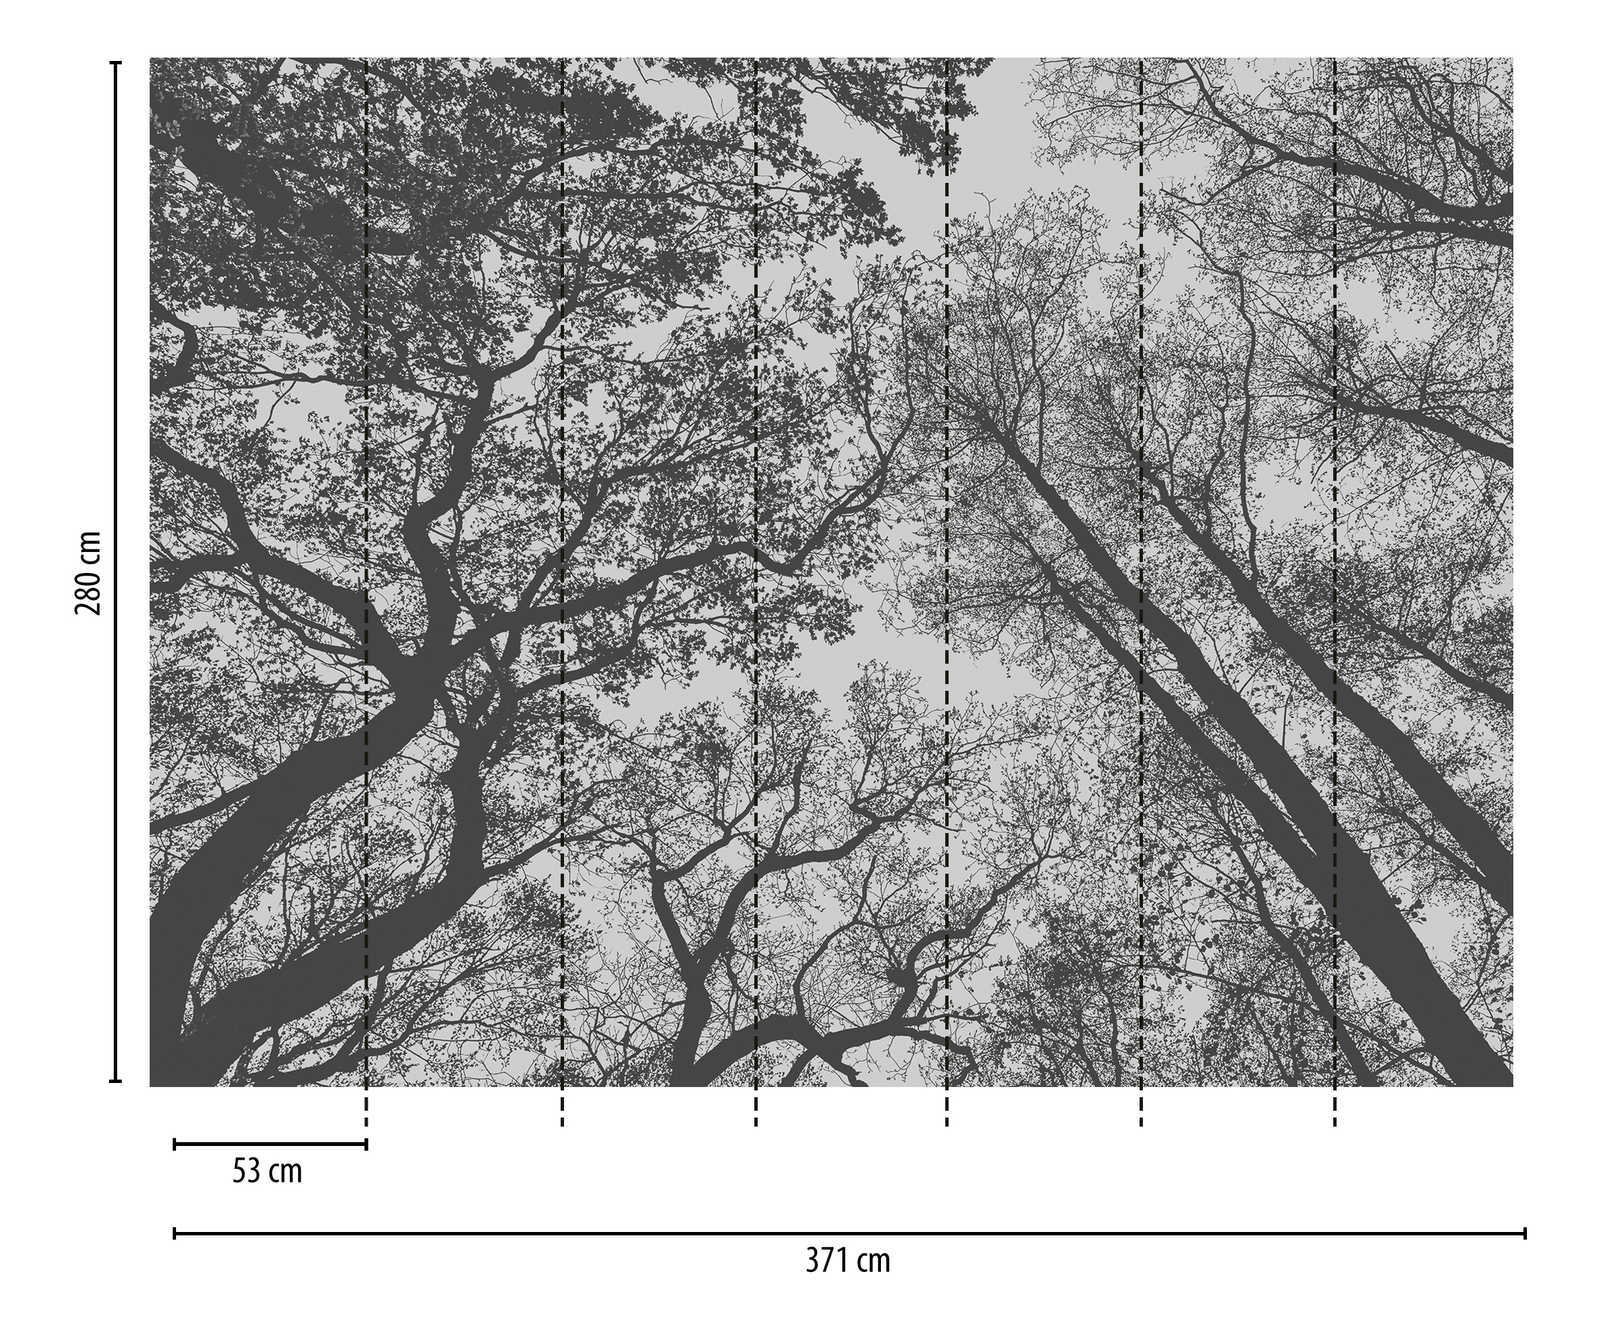             Wallpaper novelty - motif wallpaper treetops black & grey
        